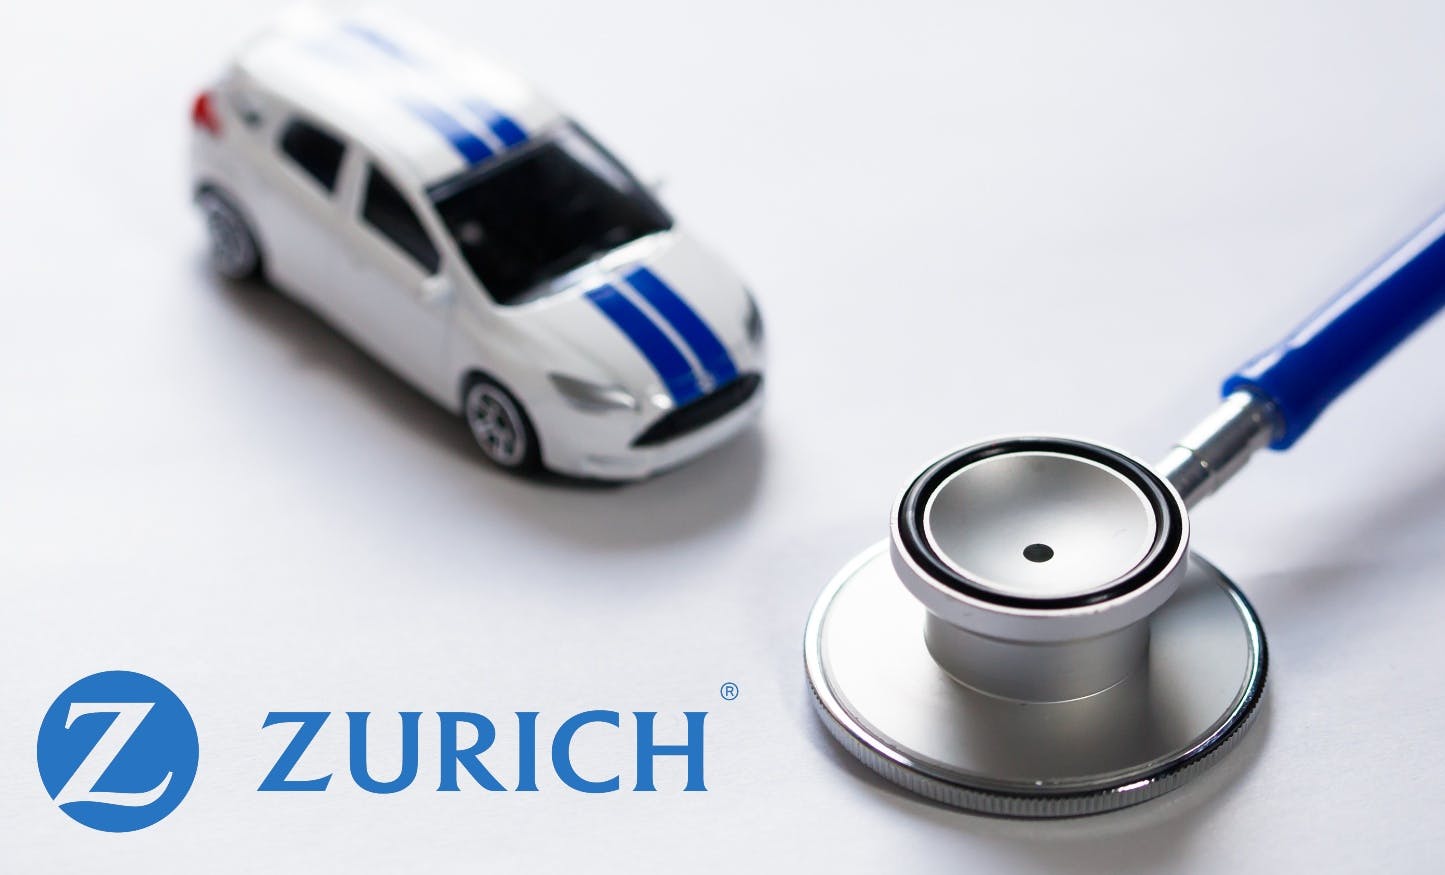 Zurich Auto Warranty: Pros and Cons